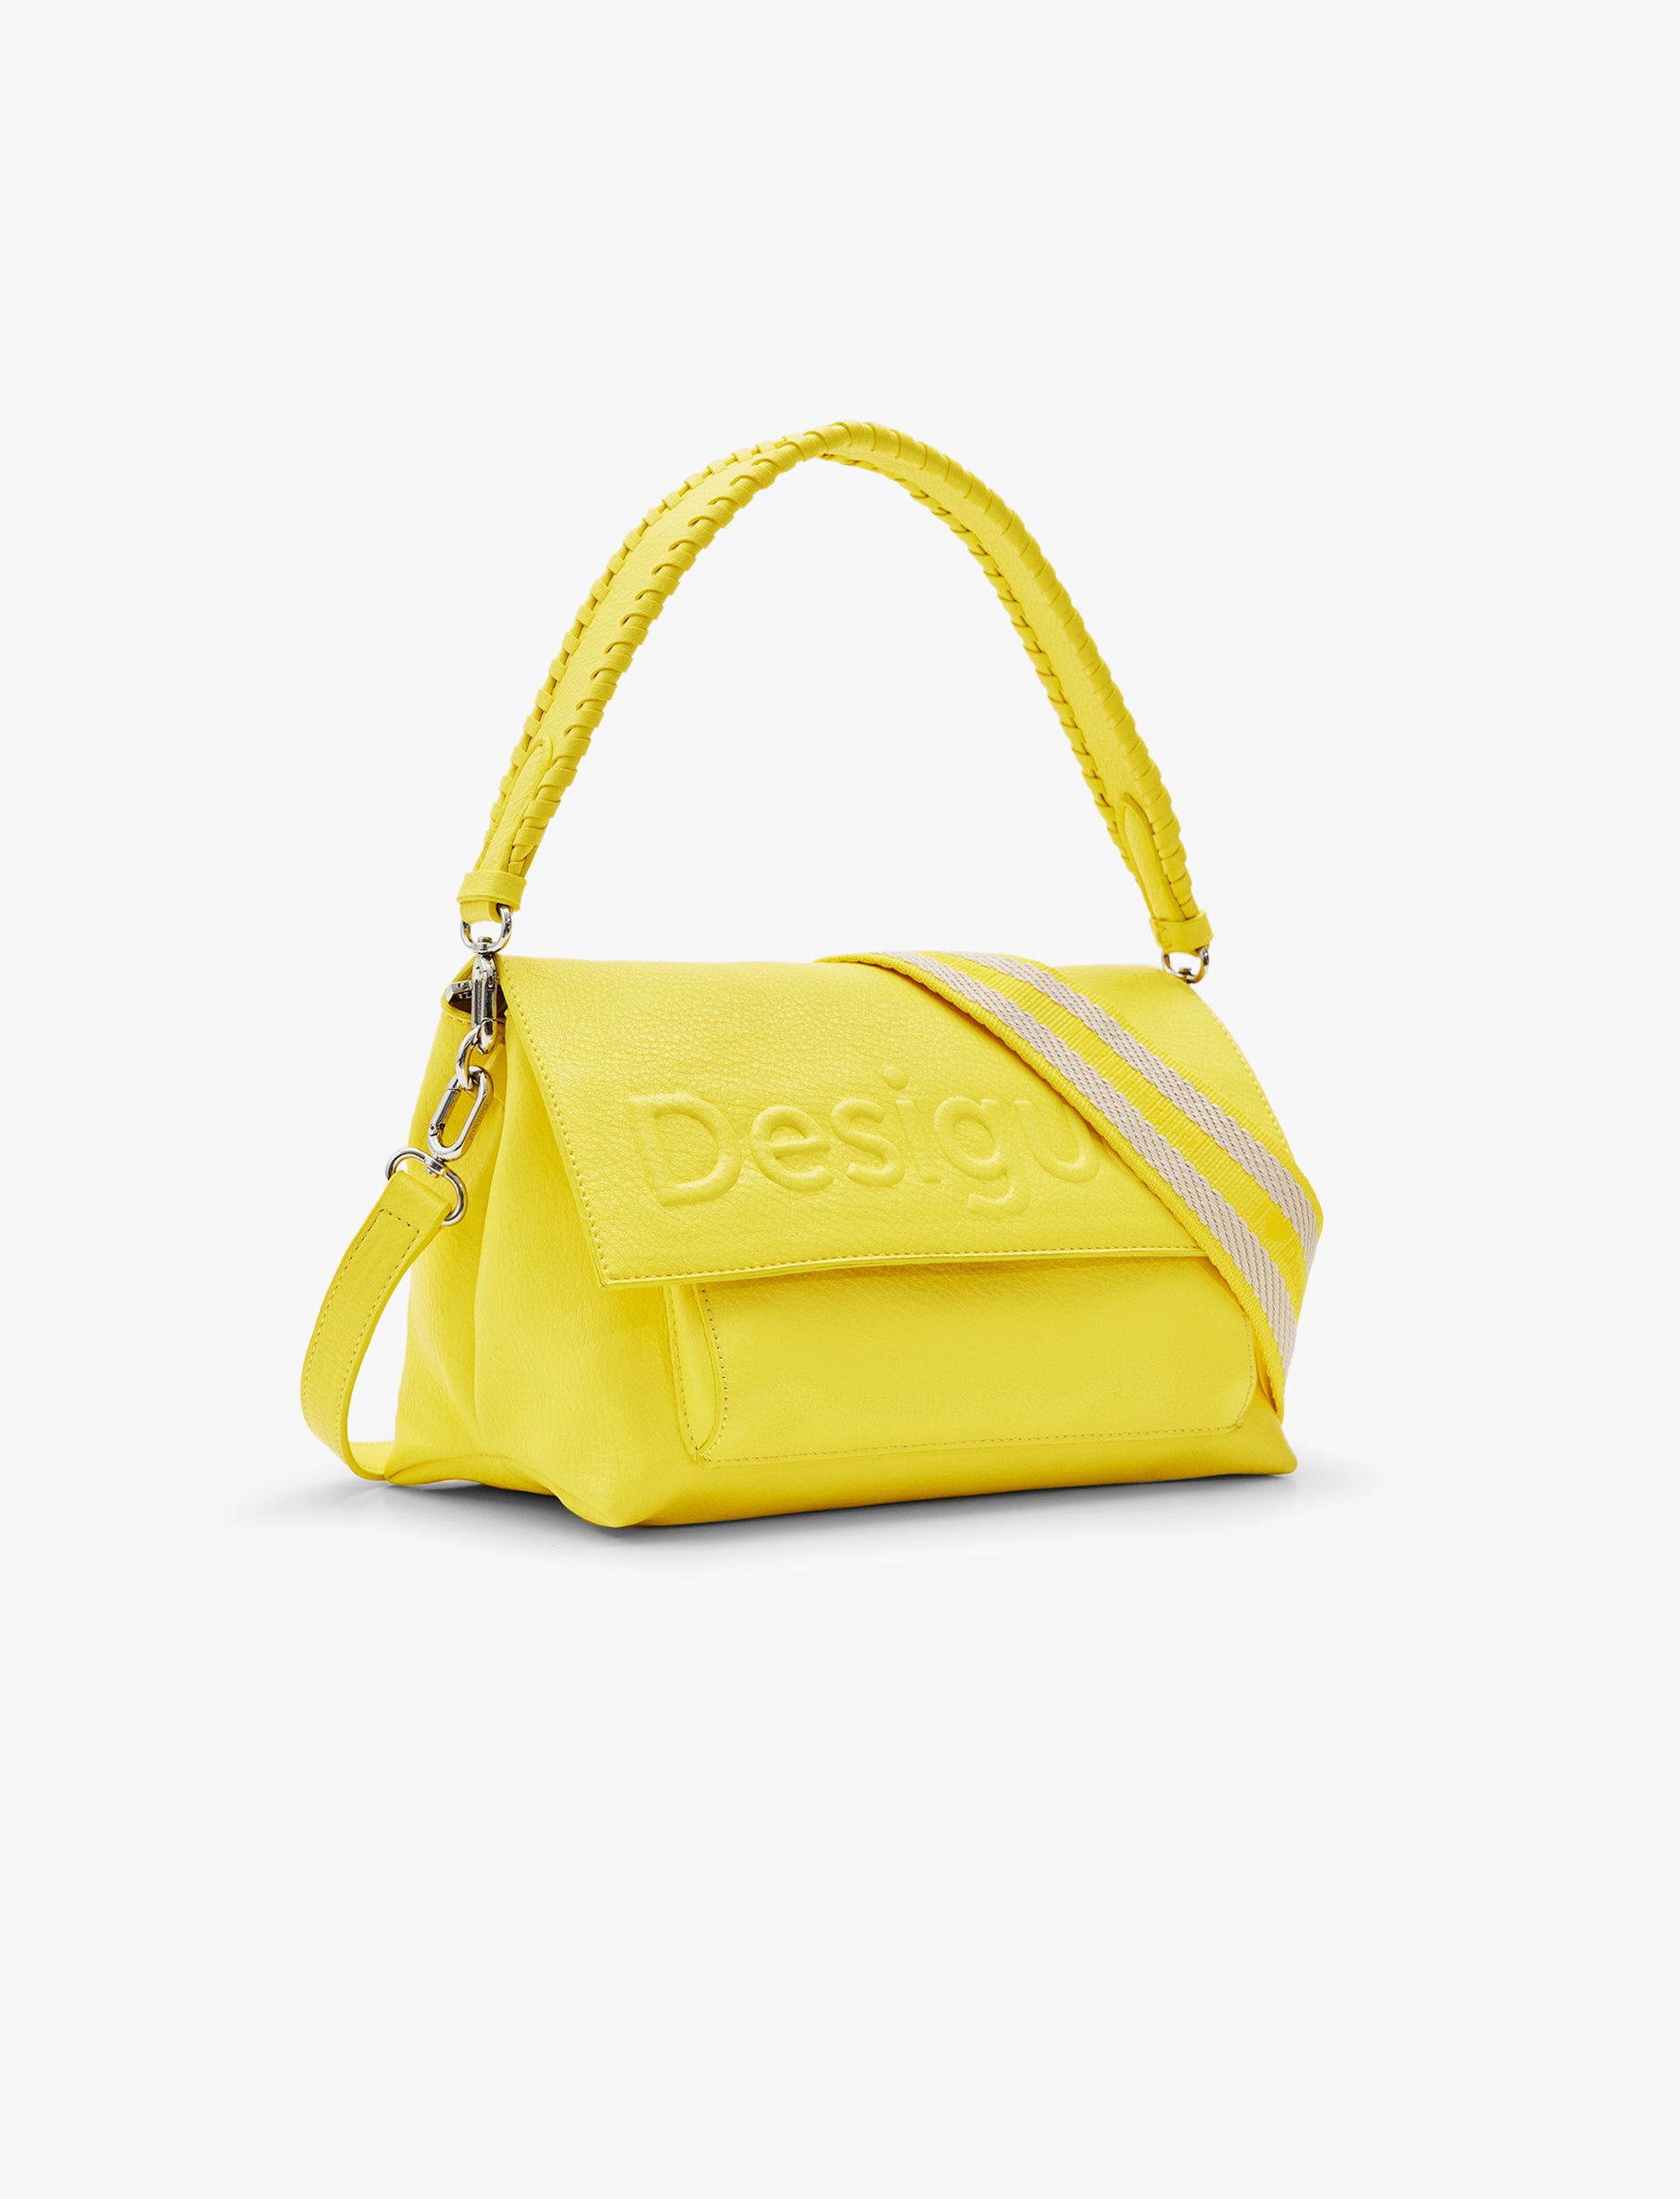 Desigual Bag Half Logo 24 Venecia 2.0 - תיק קרוסבודי בצבע צהוב